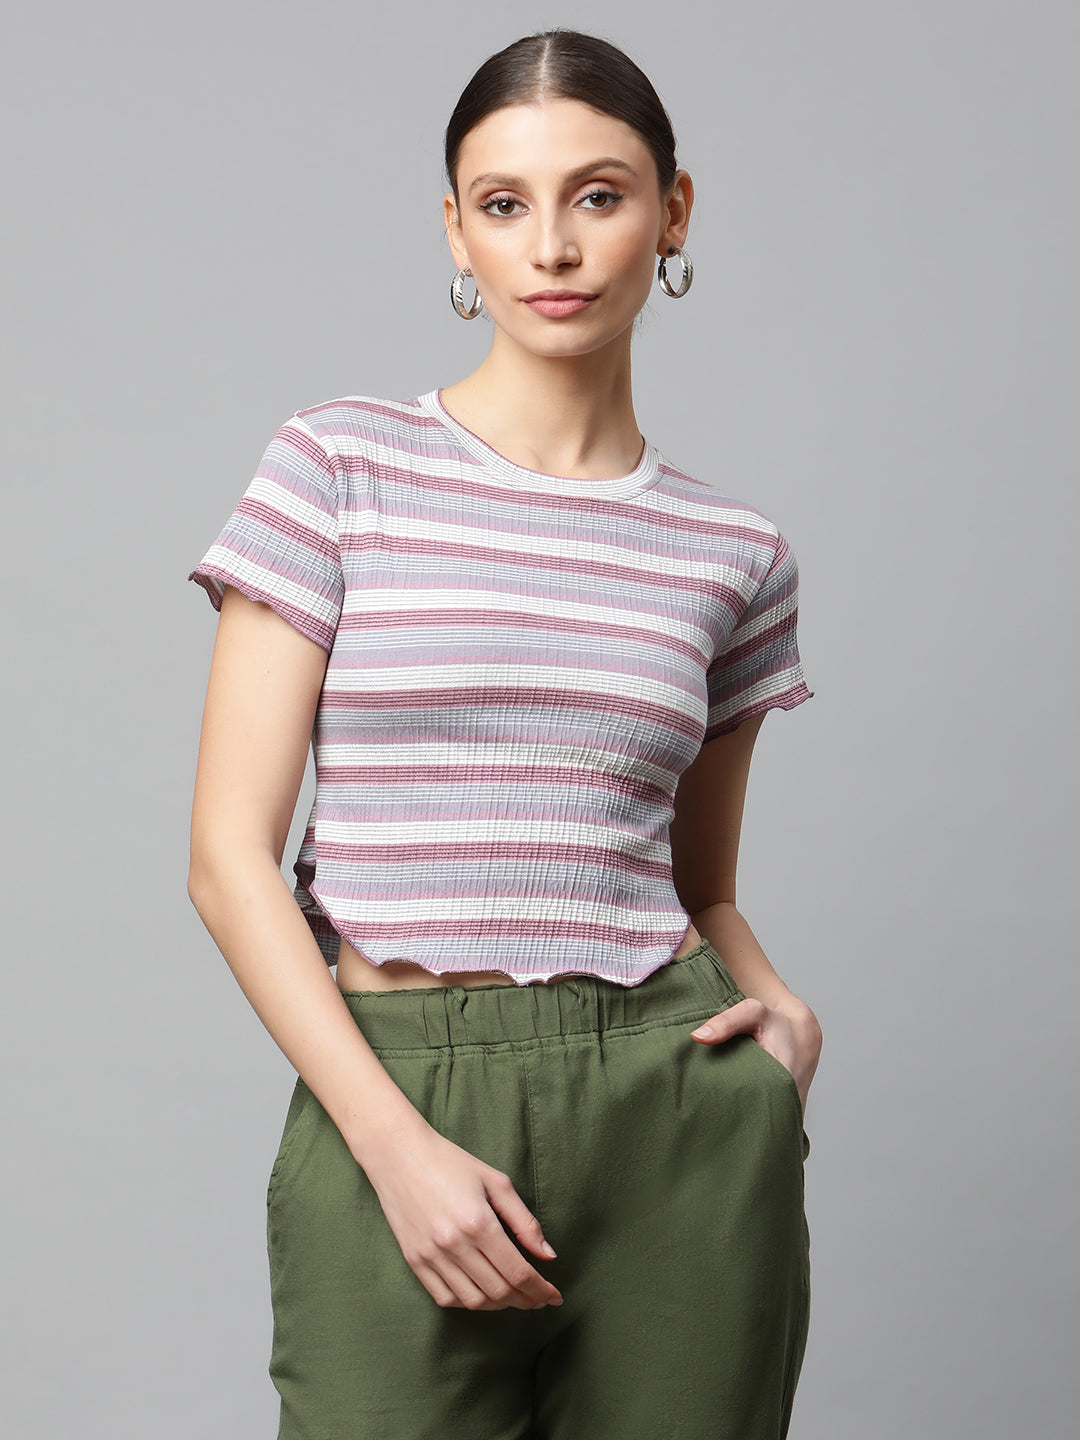 Women Brick Lavender & Multi-Color Horizontal Striped Cropped Top